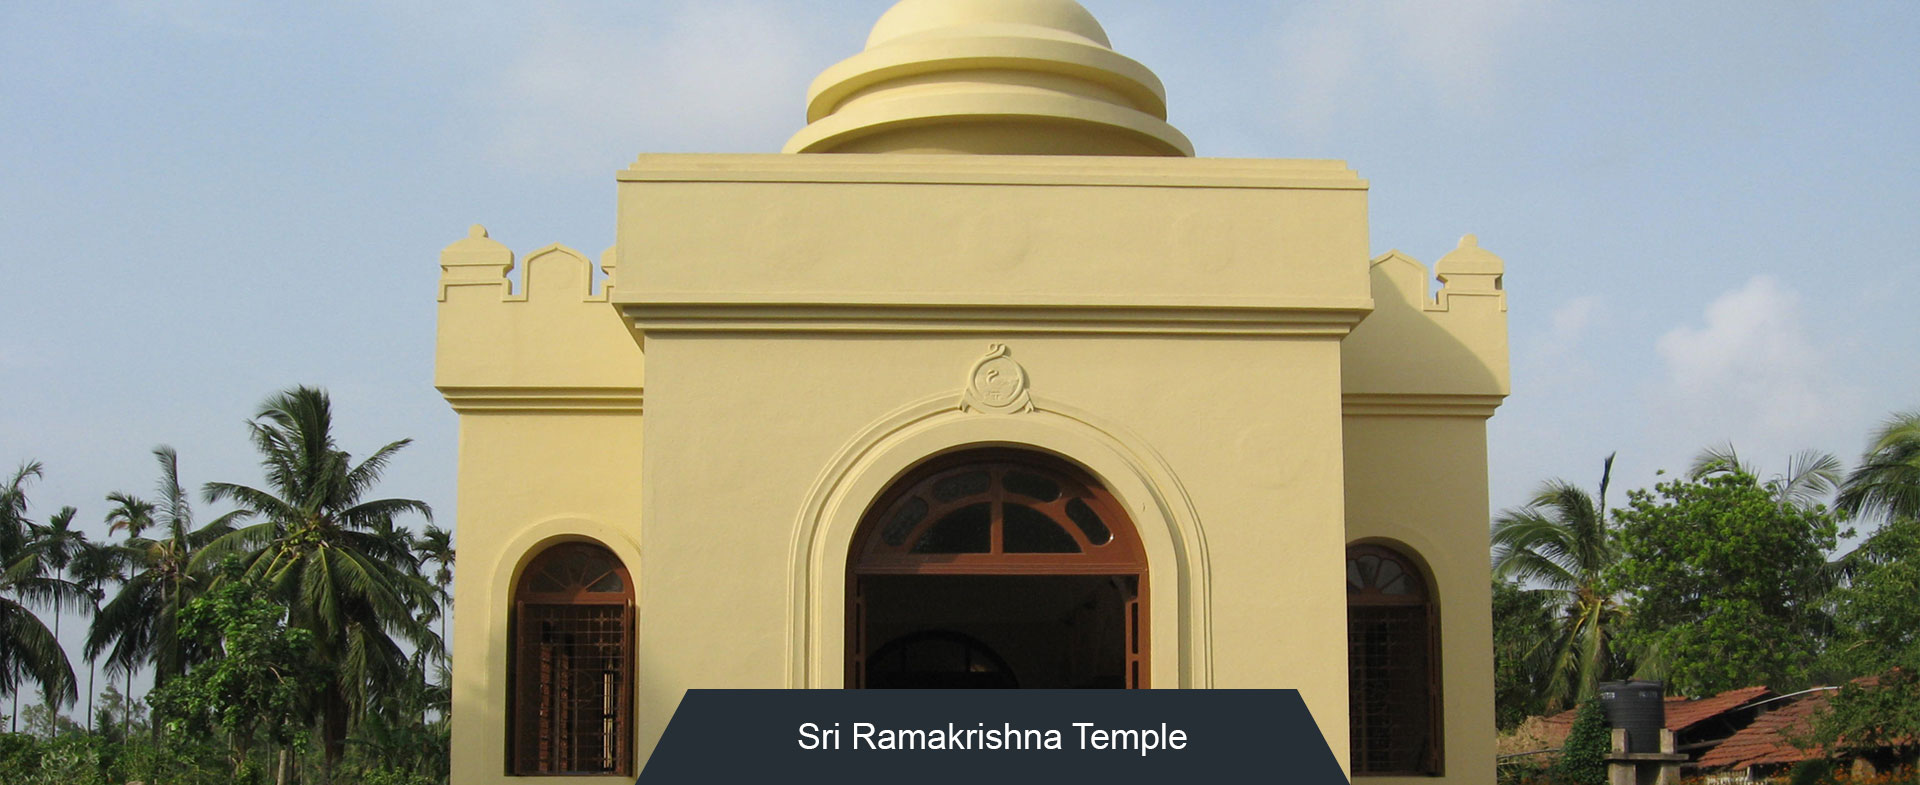 Sri Ramakrishna Temple